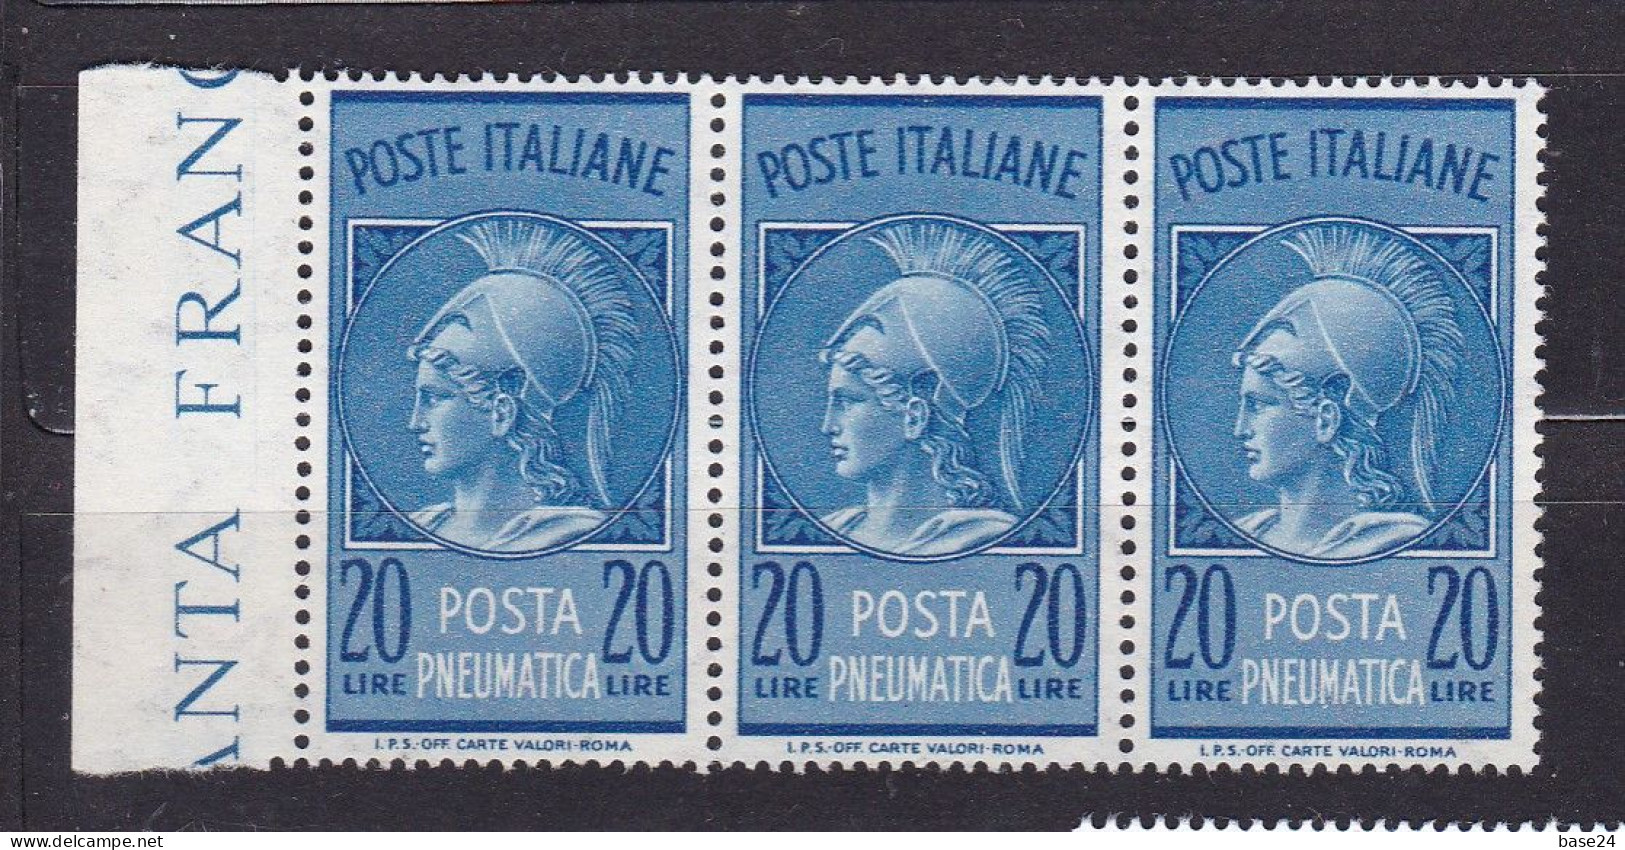 1958 Repubblica Italia Italy POSTA PNEUMATICA 3 Valori Del 20 Lire MNH** PNEUMATIC MAIL - Express/pneumatic Mail